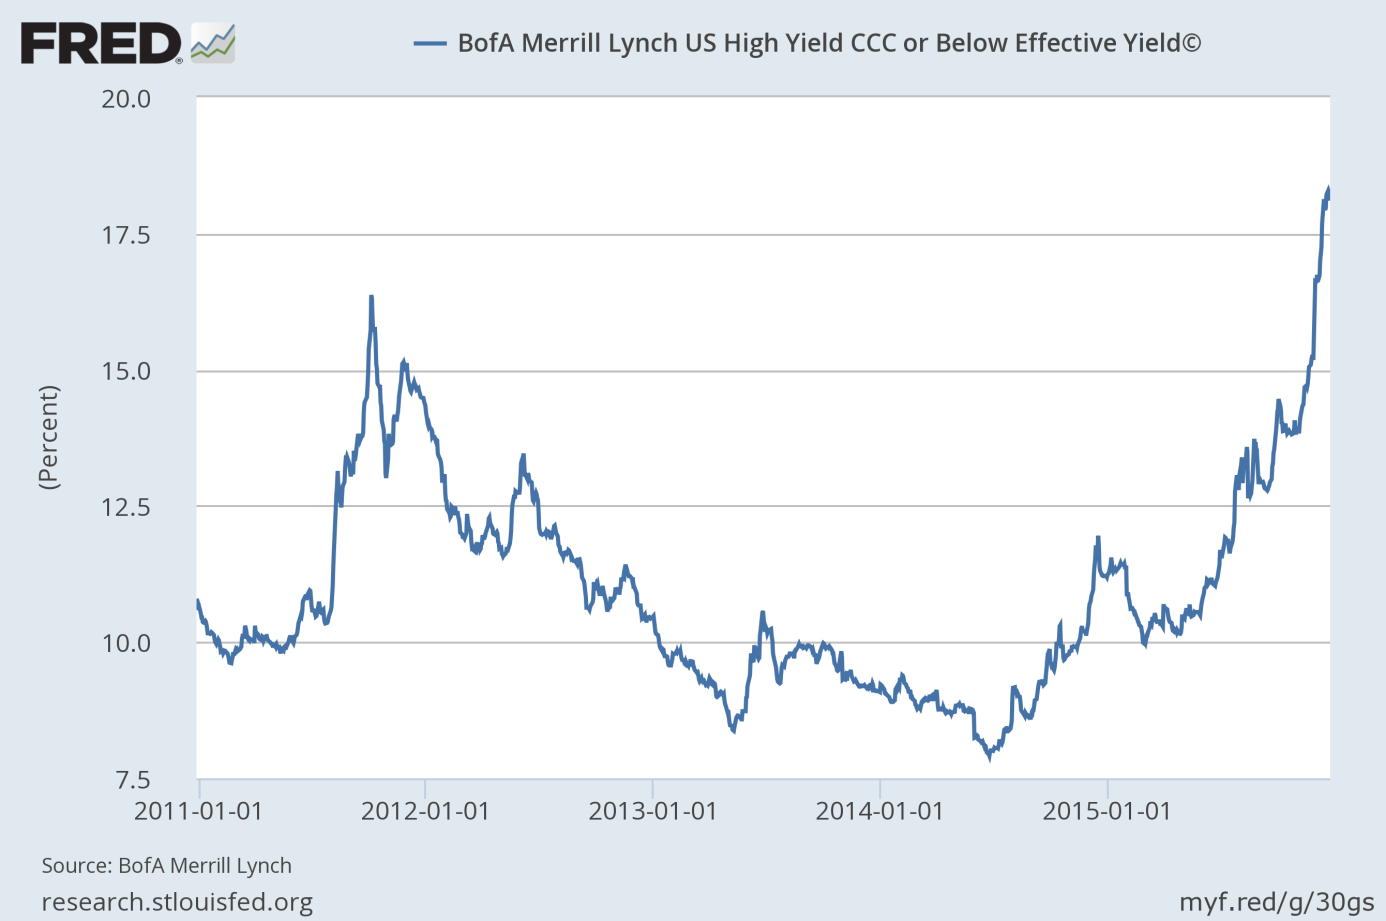 BofA Merrill Lynch US High Yield CCC